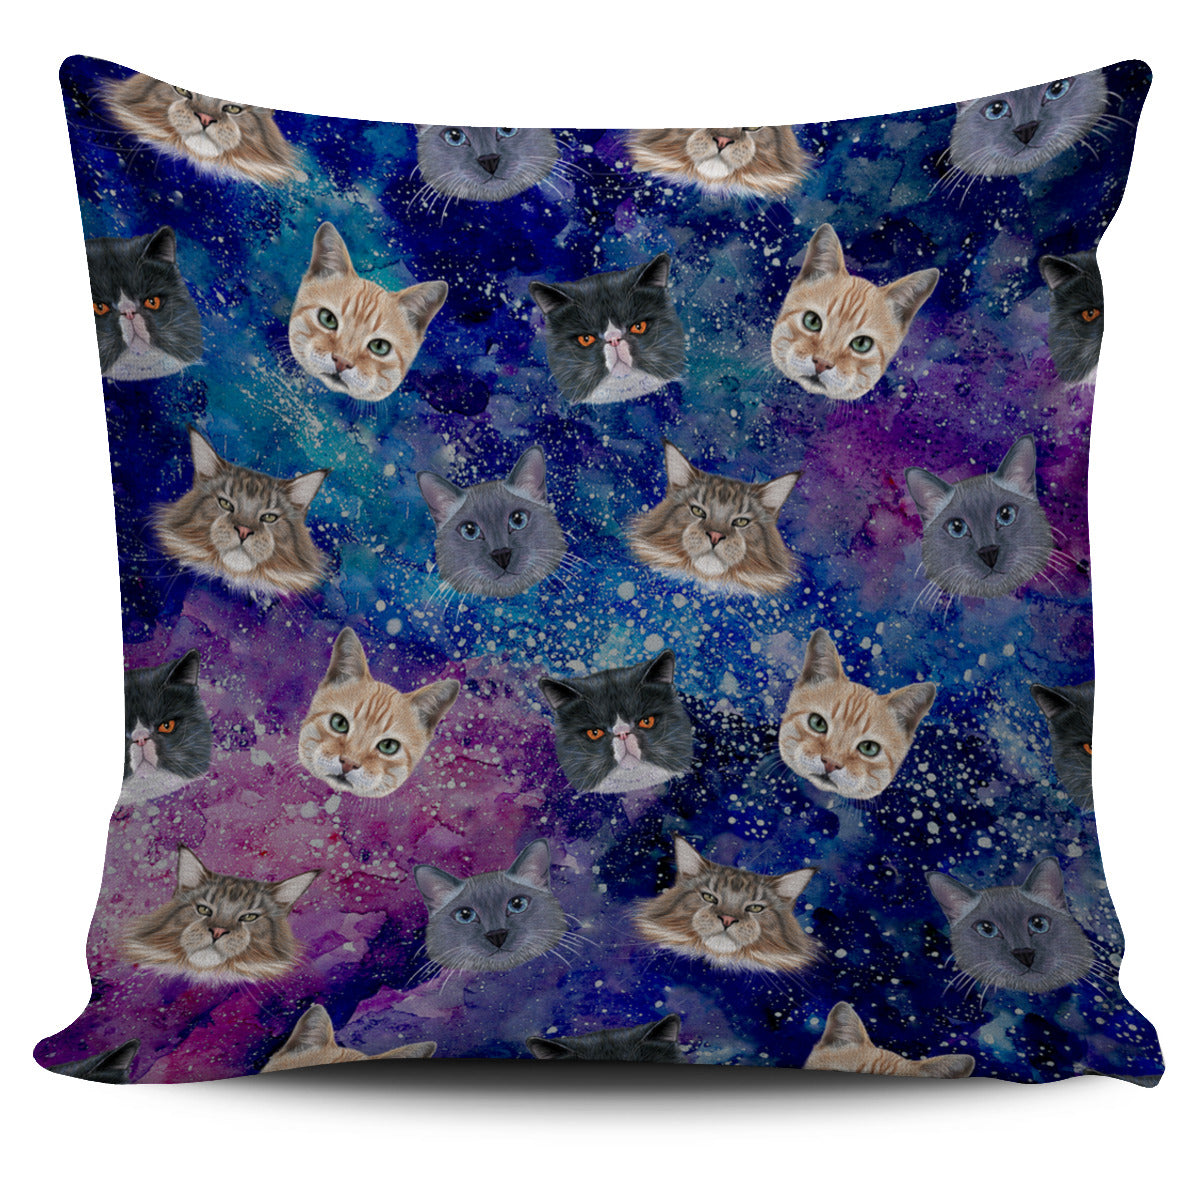 Cosmic Cat Pillow Cover